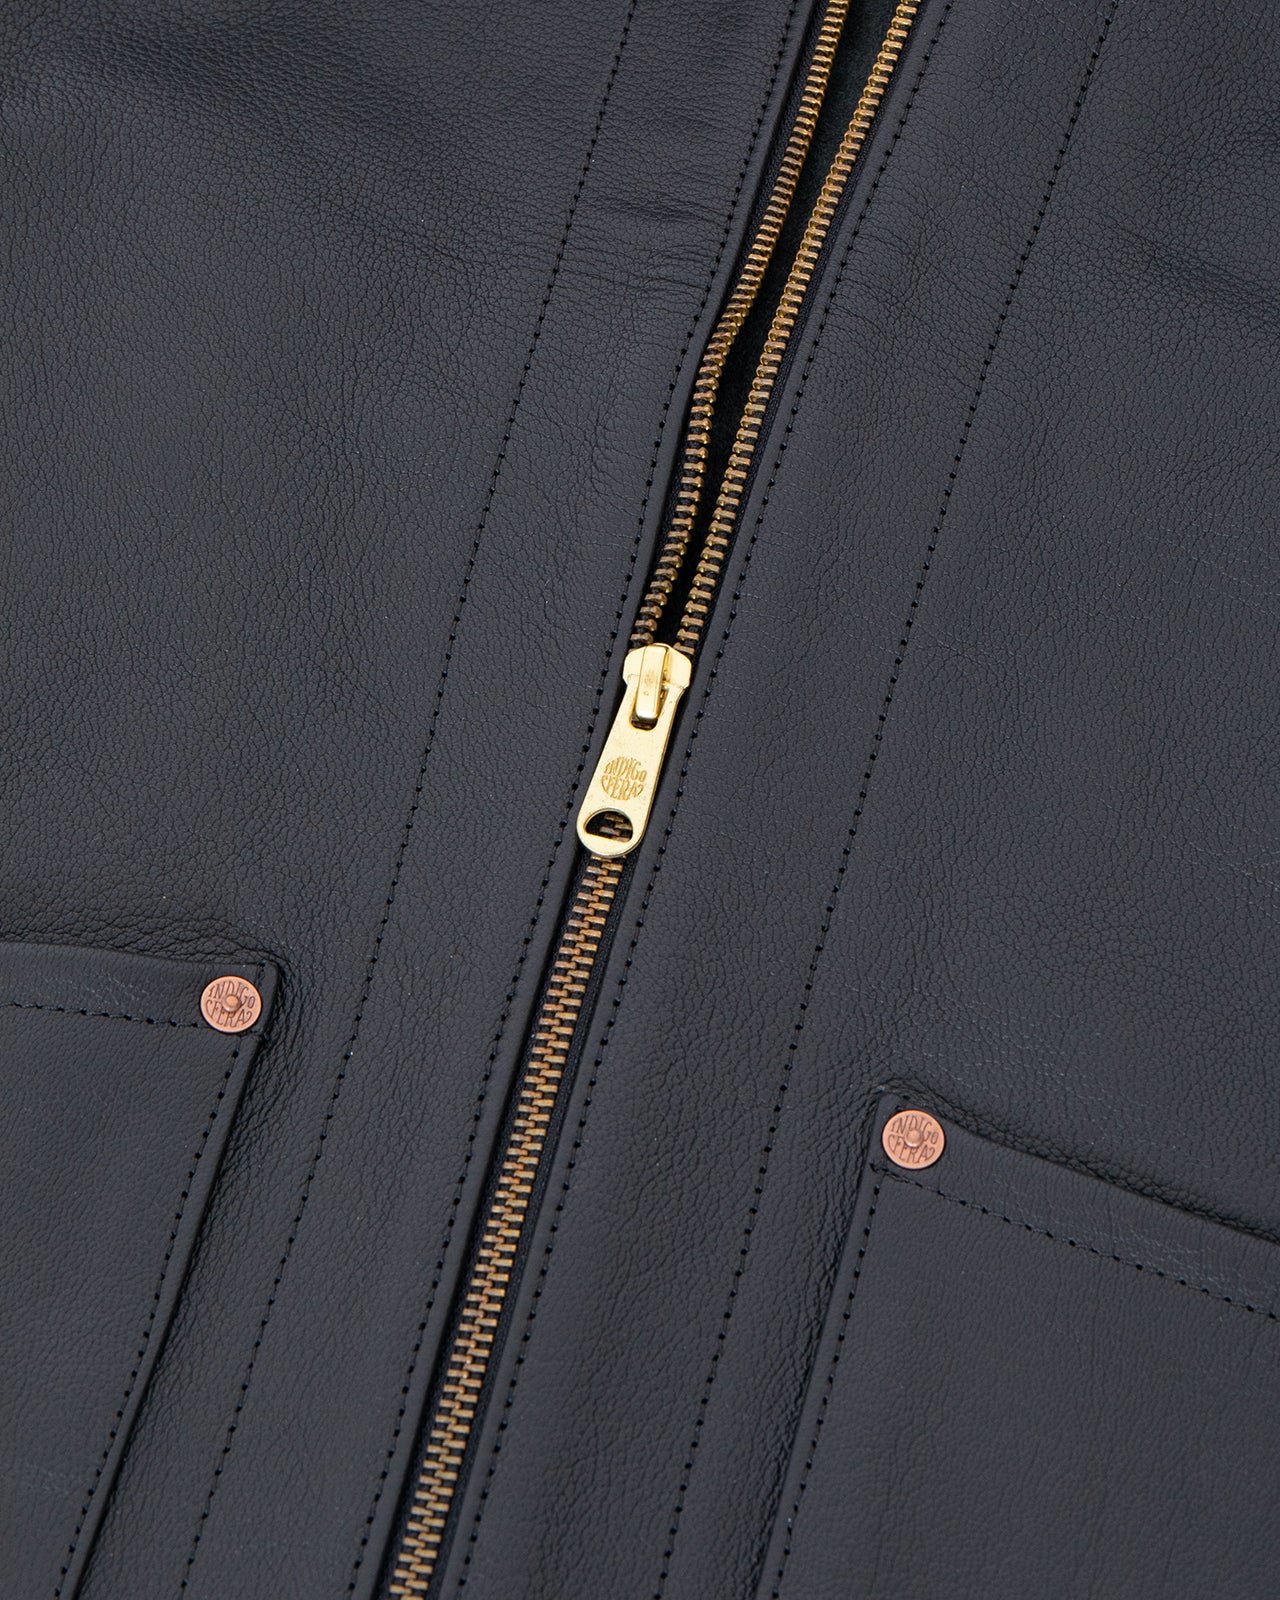 Indigofera Monroe Leather Vest, Black